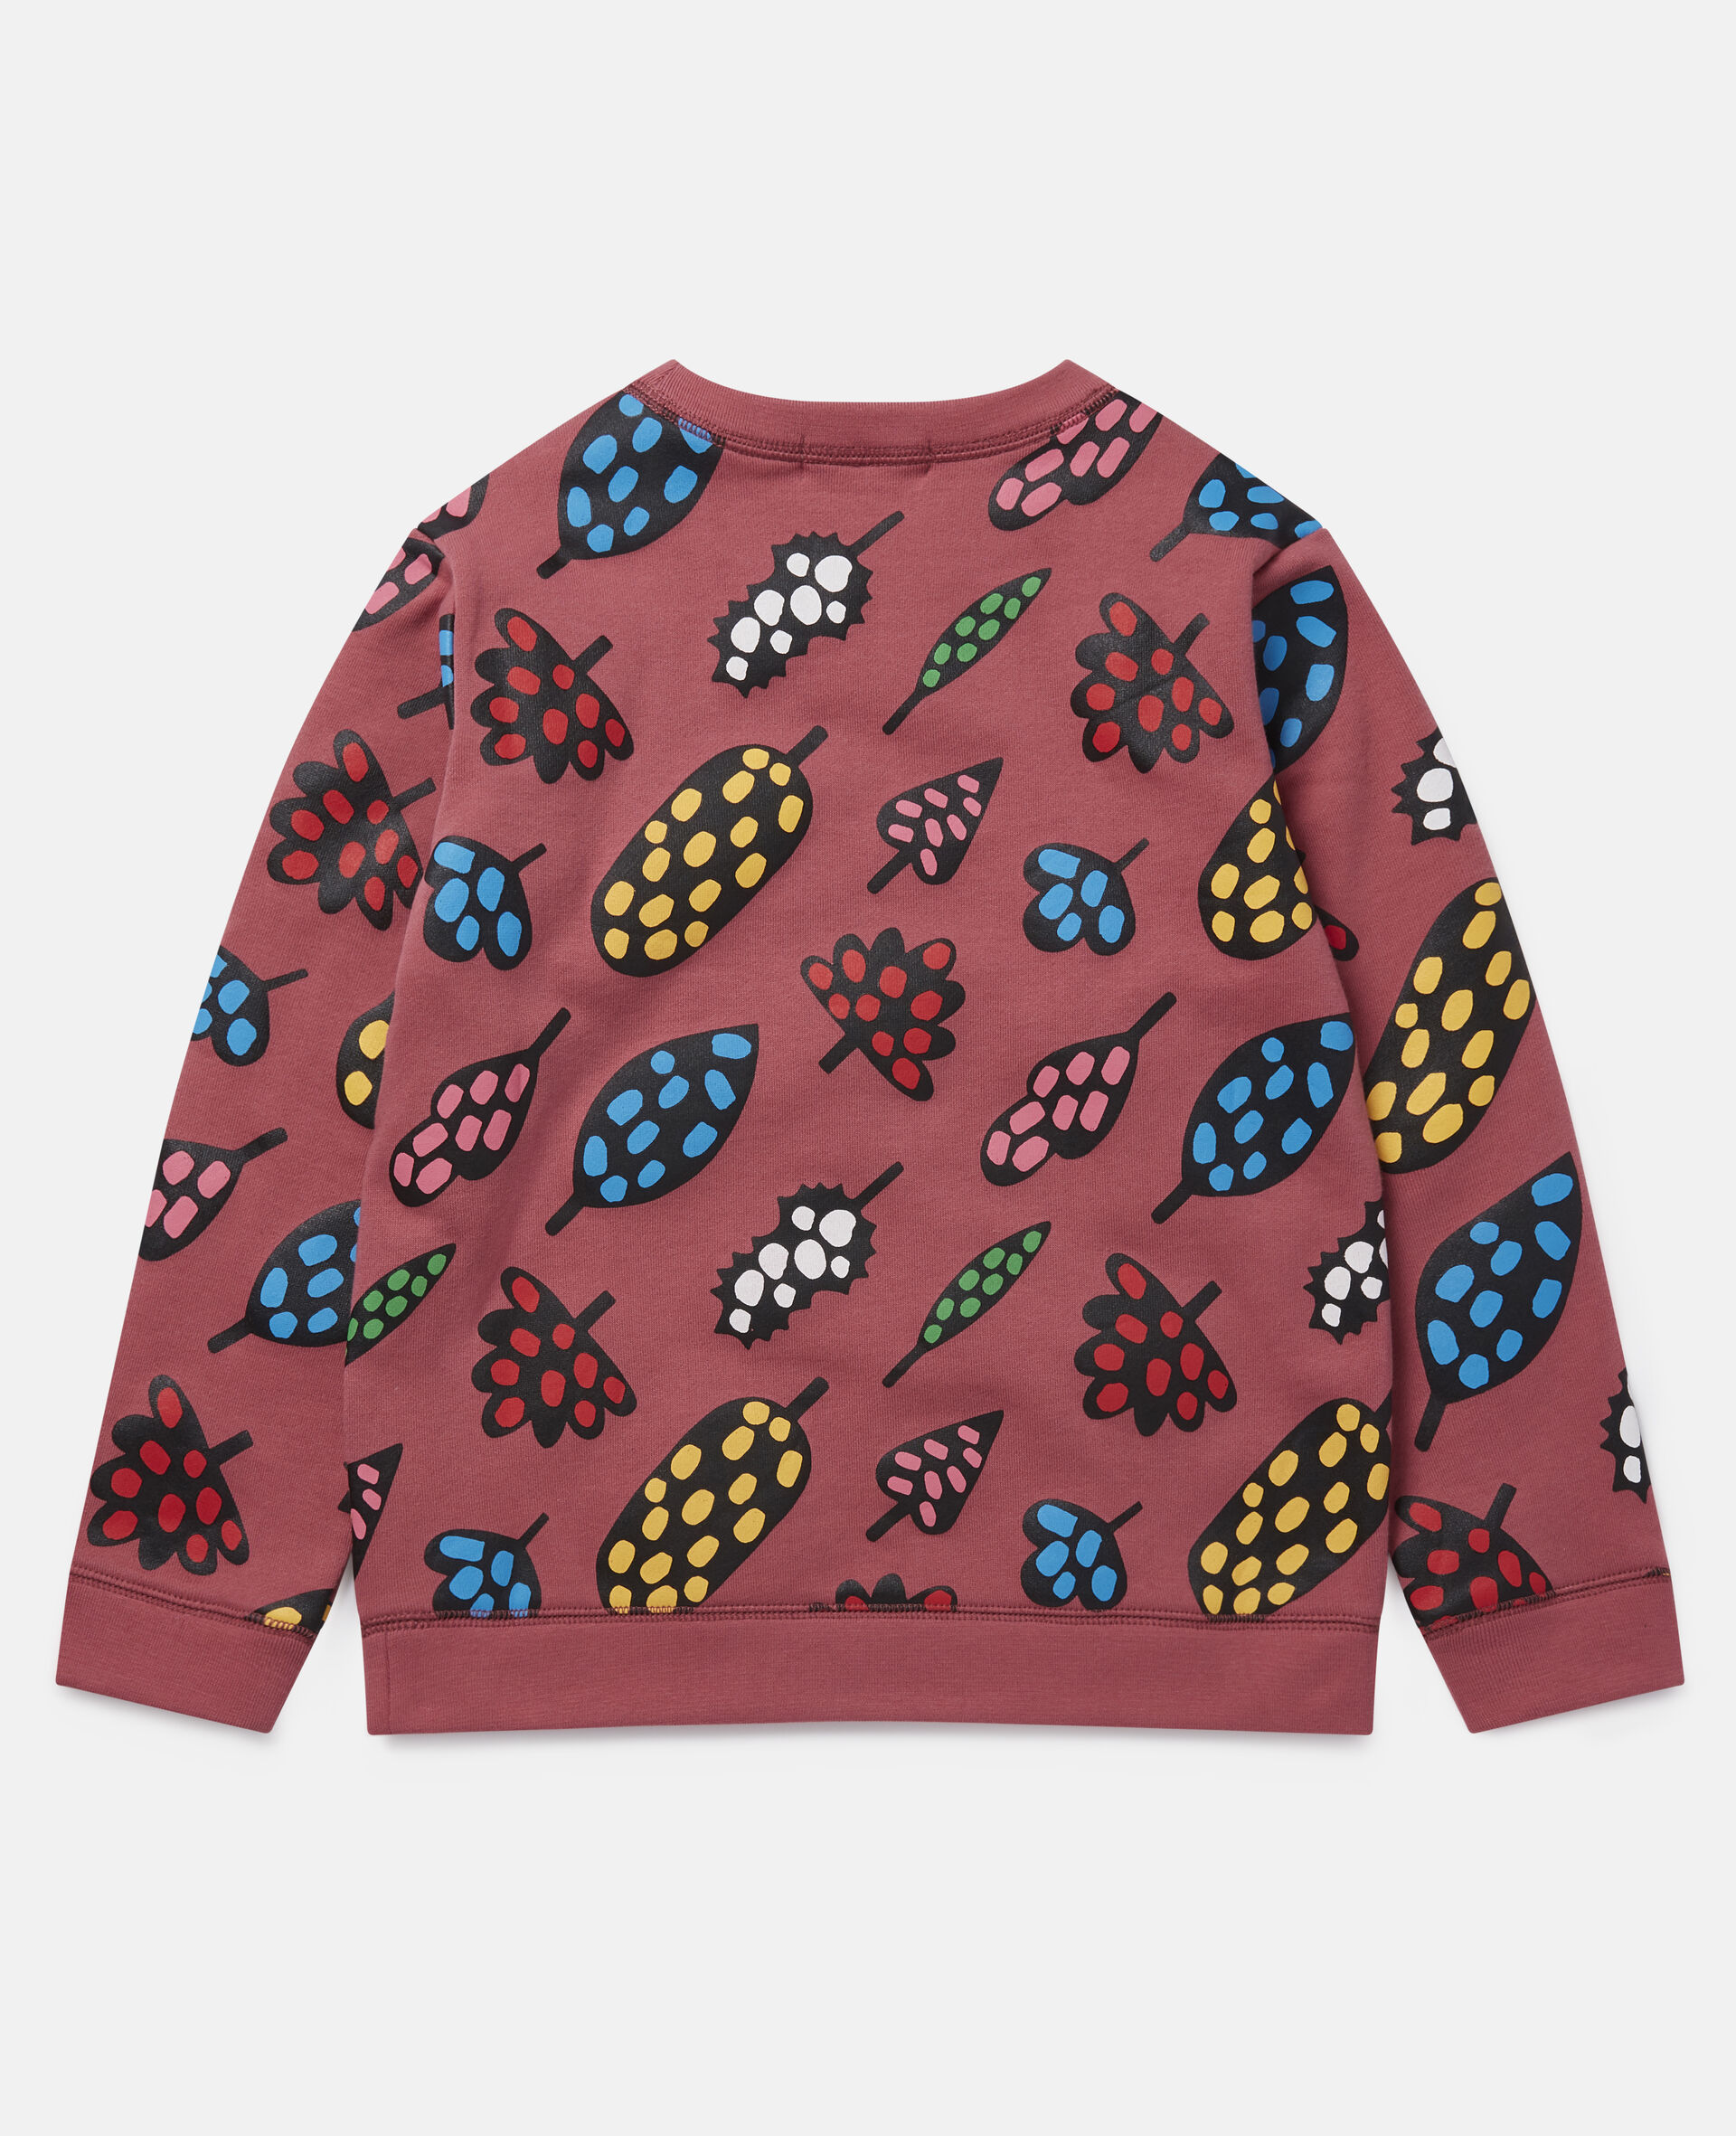 Spotty Leaves Cotton Fleece Sweatshirt -Multicolour-large image number 3